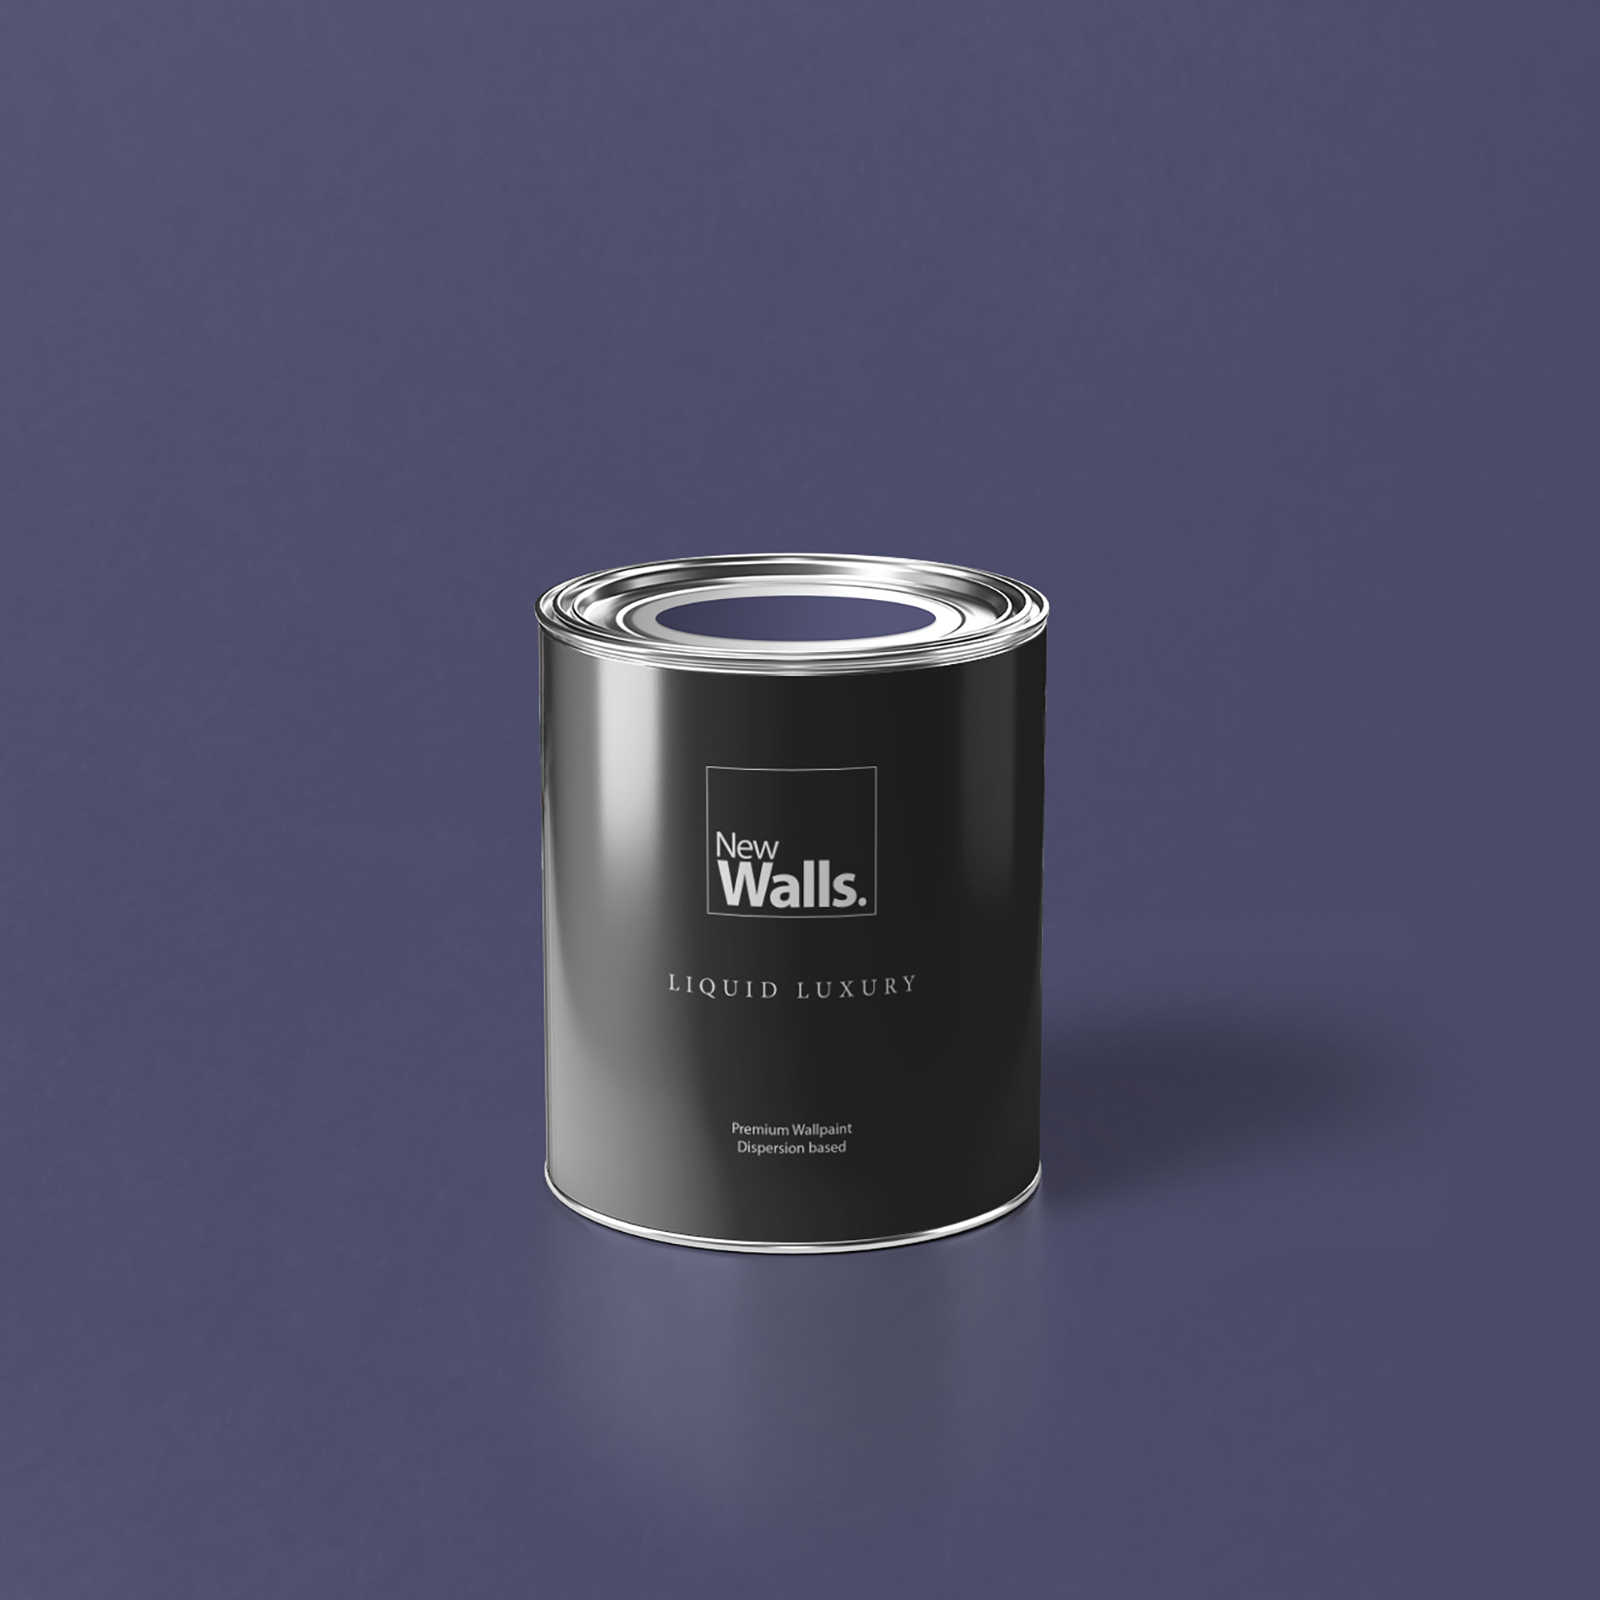         Premium Wall Paint Heavenly Dukellila »Magical Mauve« NW205 – 1 litre
    